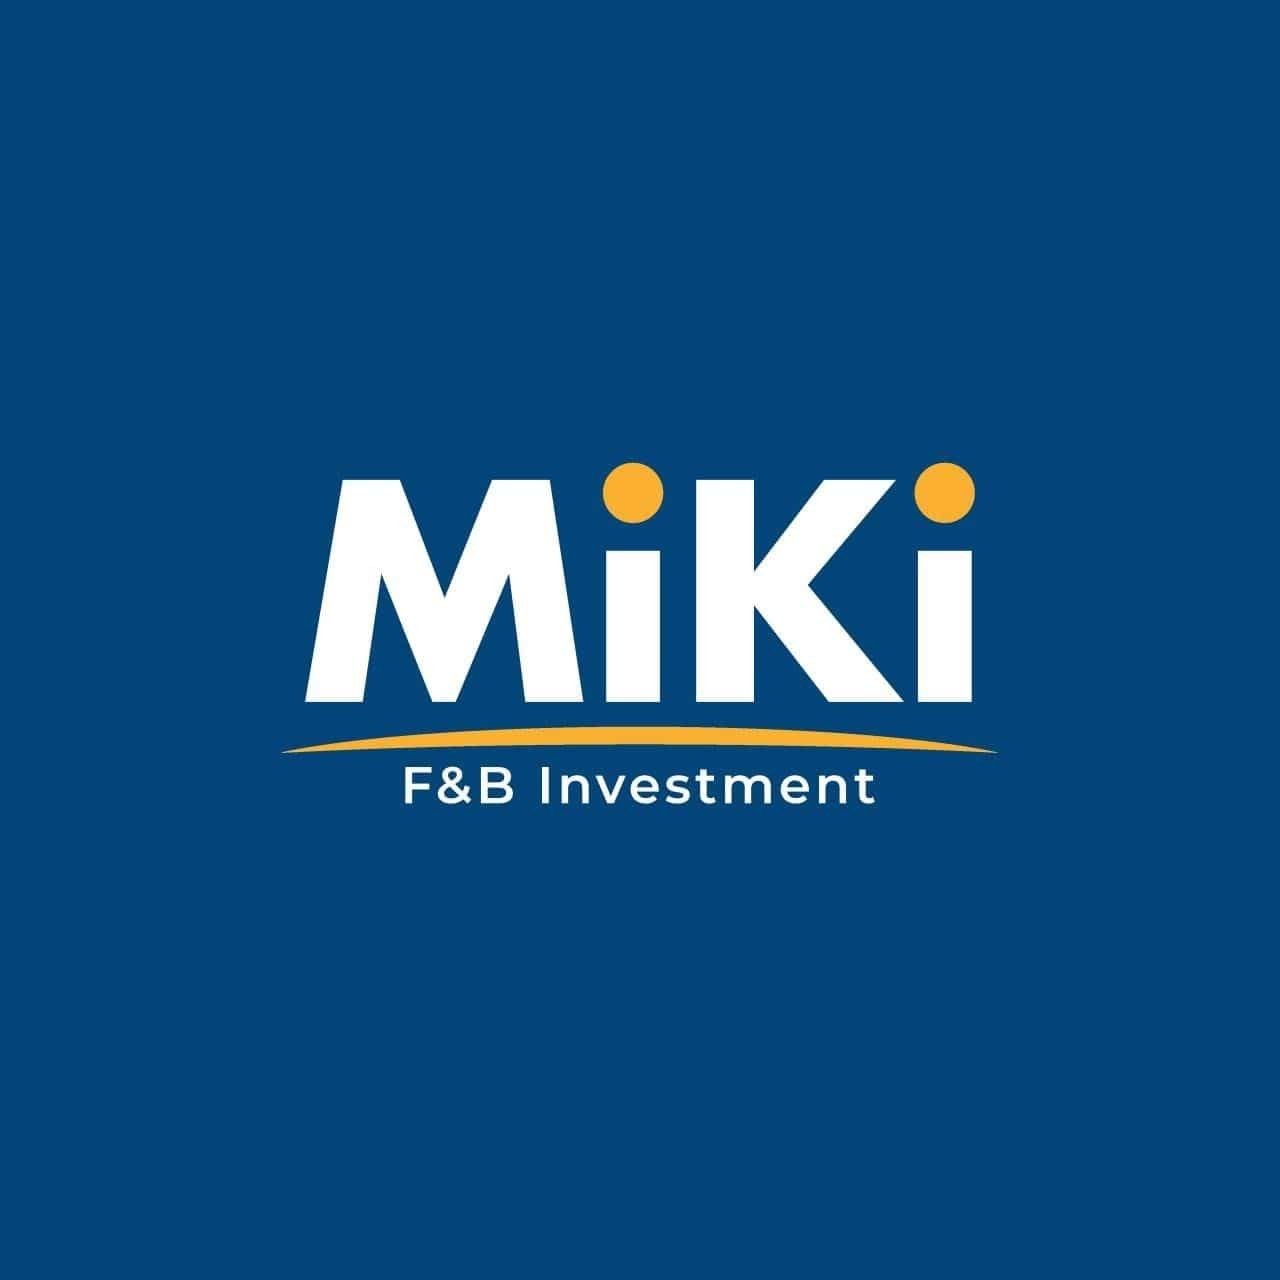 Miki F&B Investment